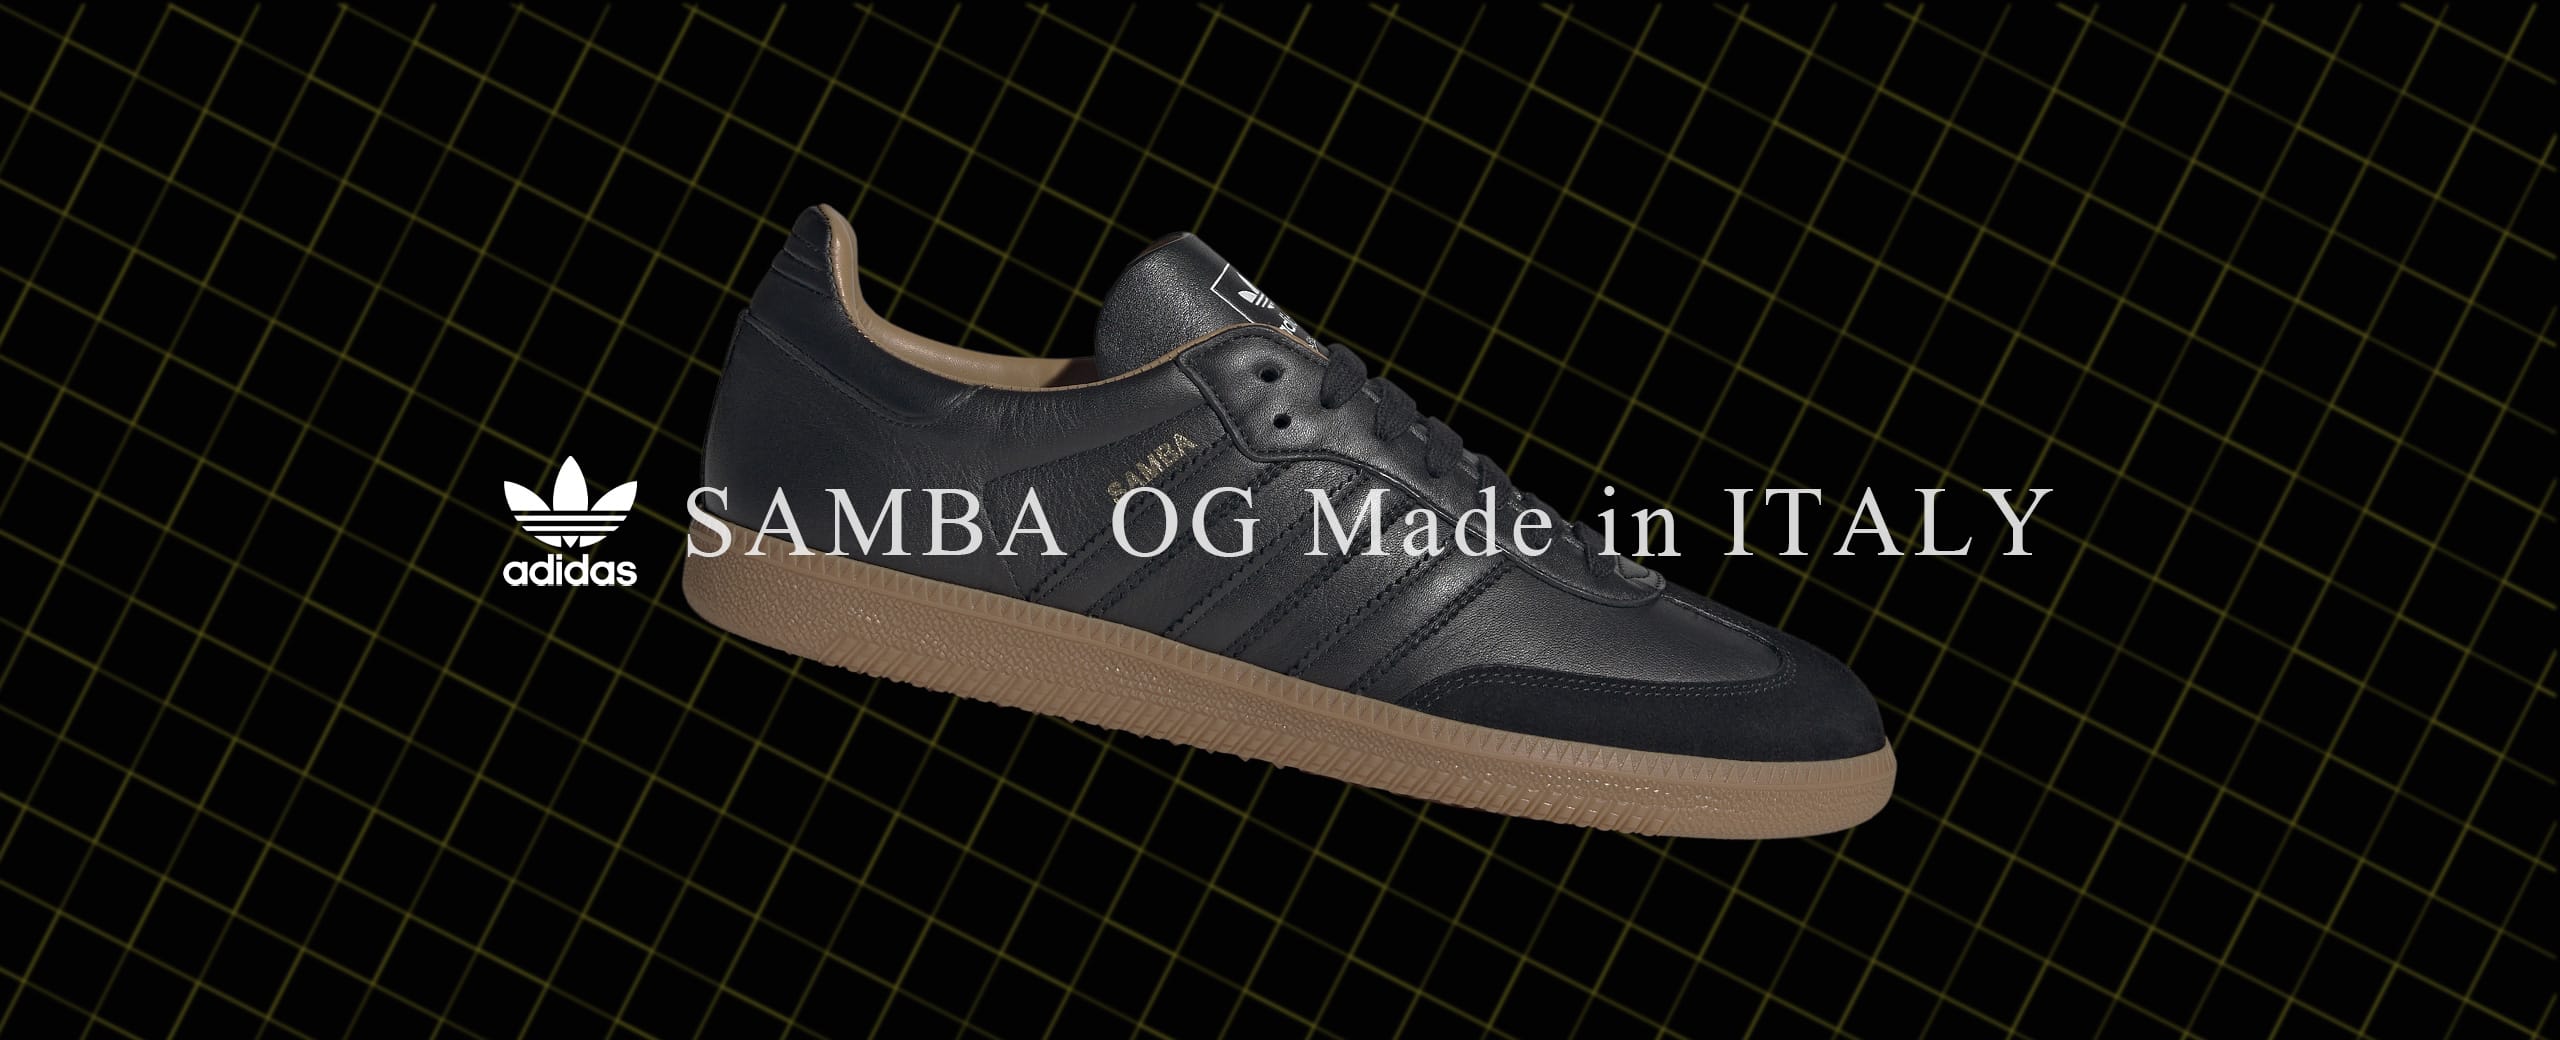 "adidas Originals SAMBA OG Made in ITALY"